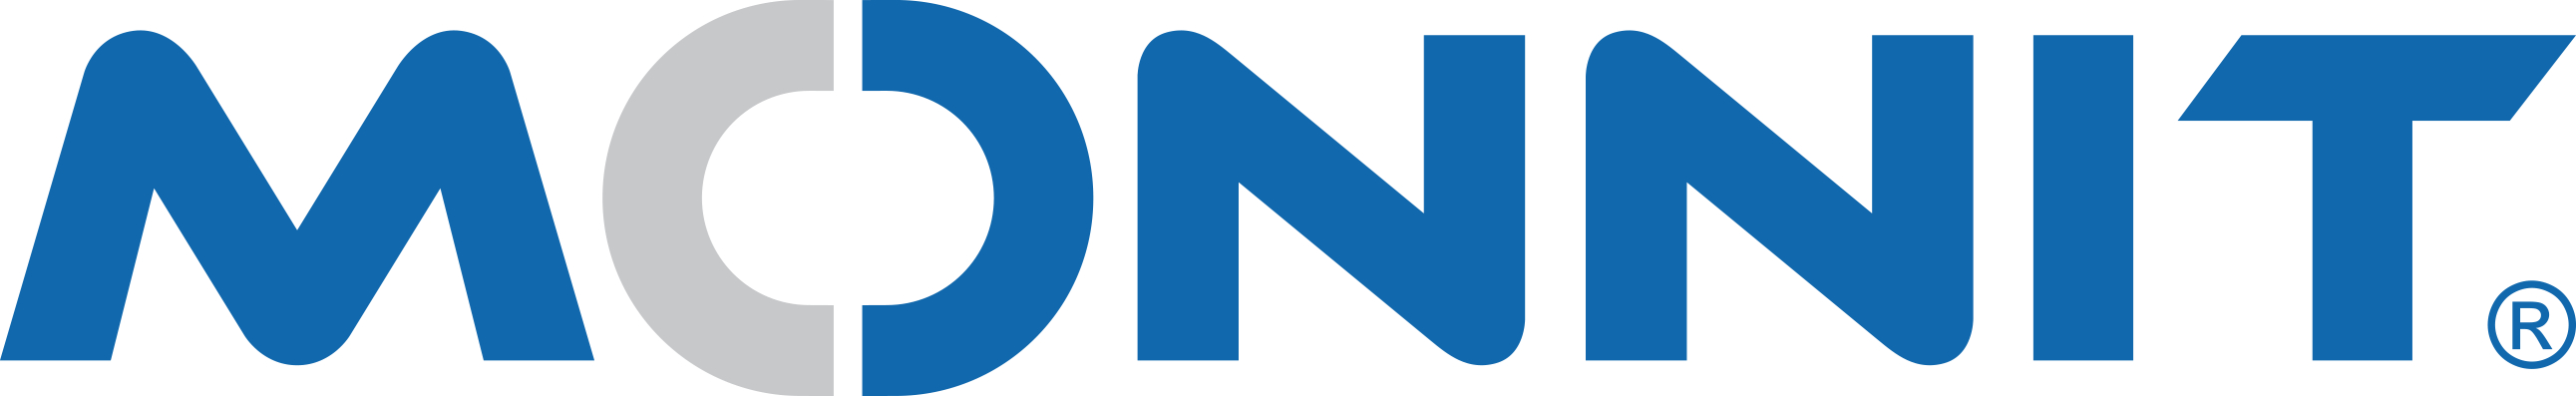 https://mms.businesswire.com/media/20220920006140/en/1042700/5/Monnit-logo-new.jpg